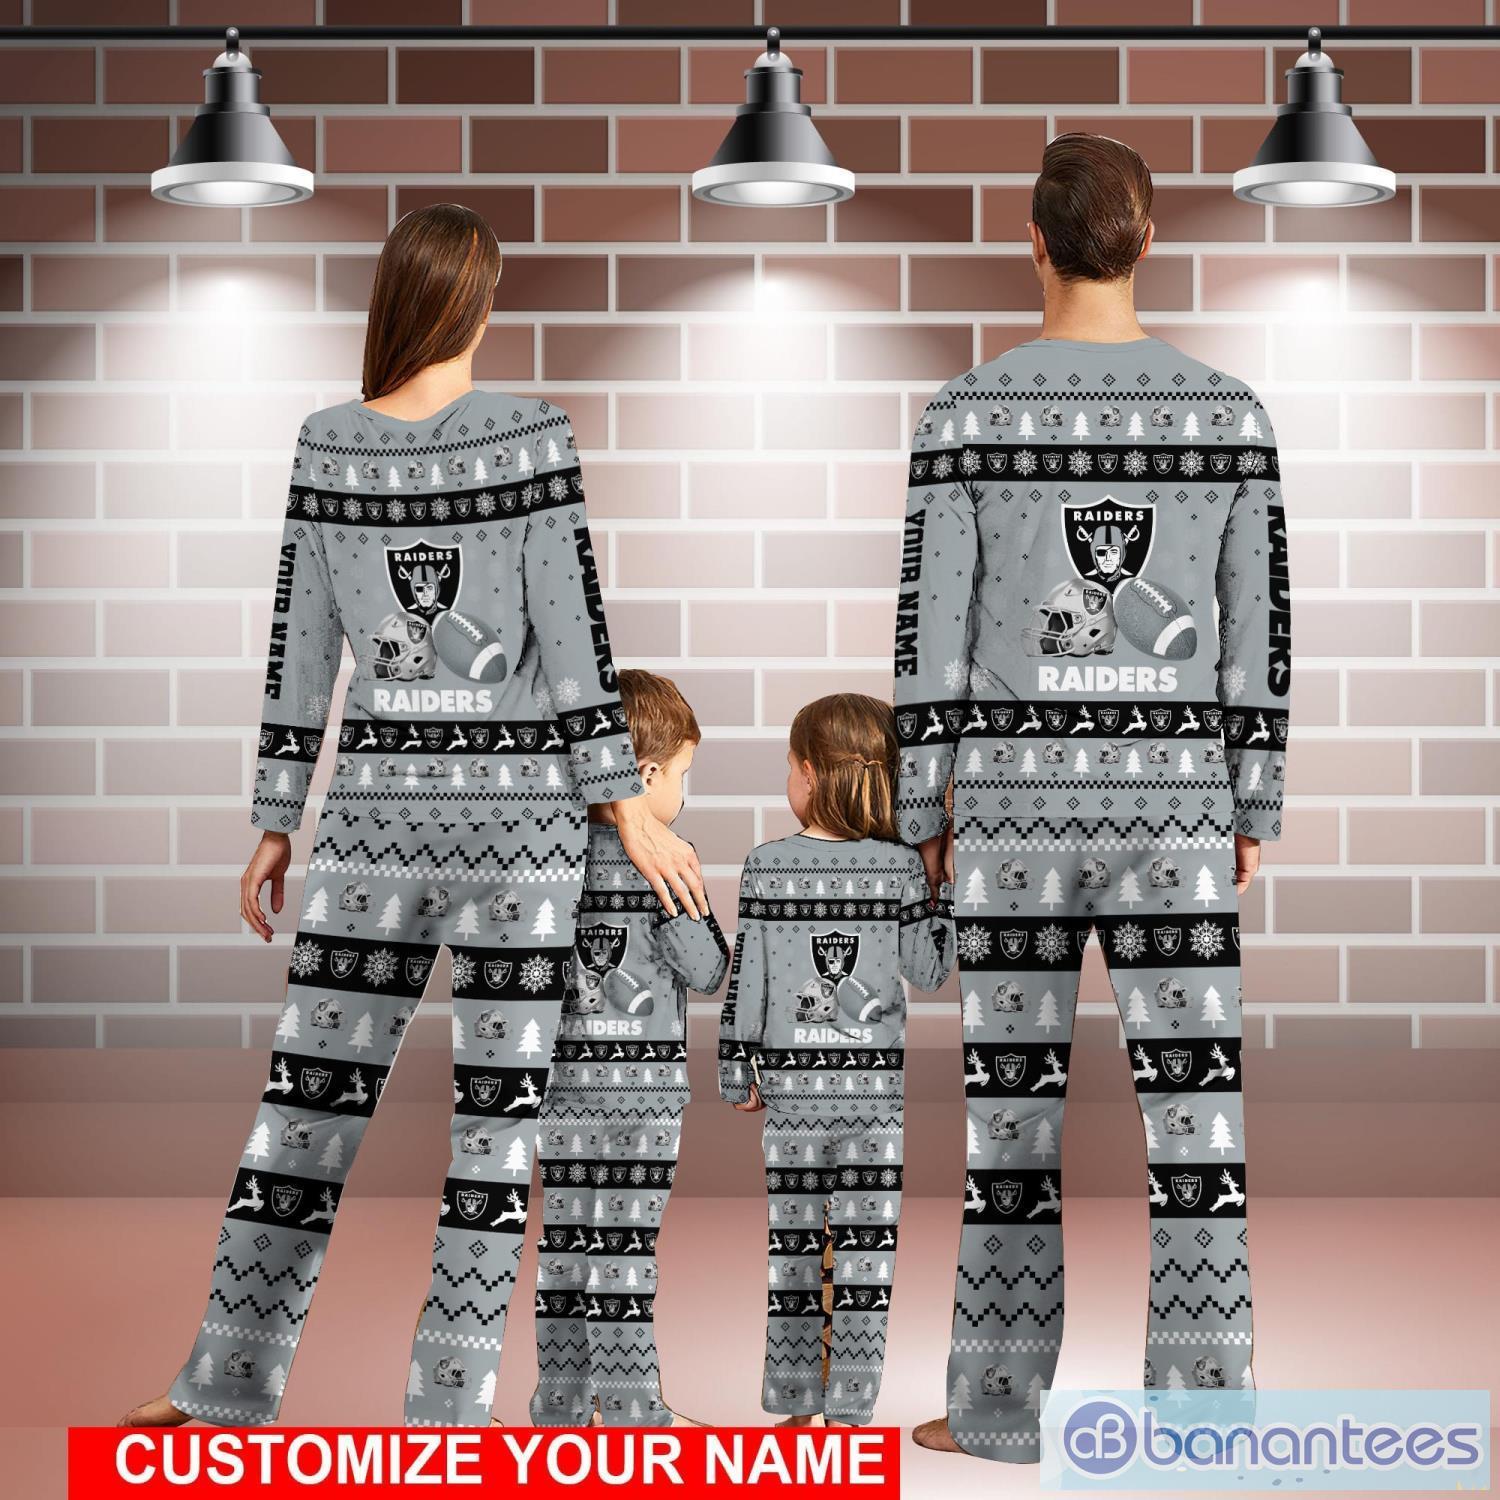 Las Vegas Raiders Custom Name Christmas Pajamas For Fans - Banantees